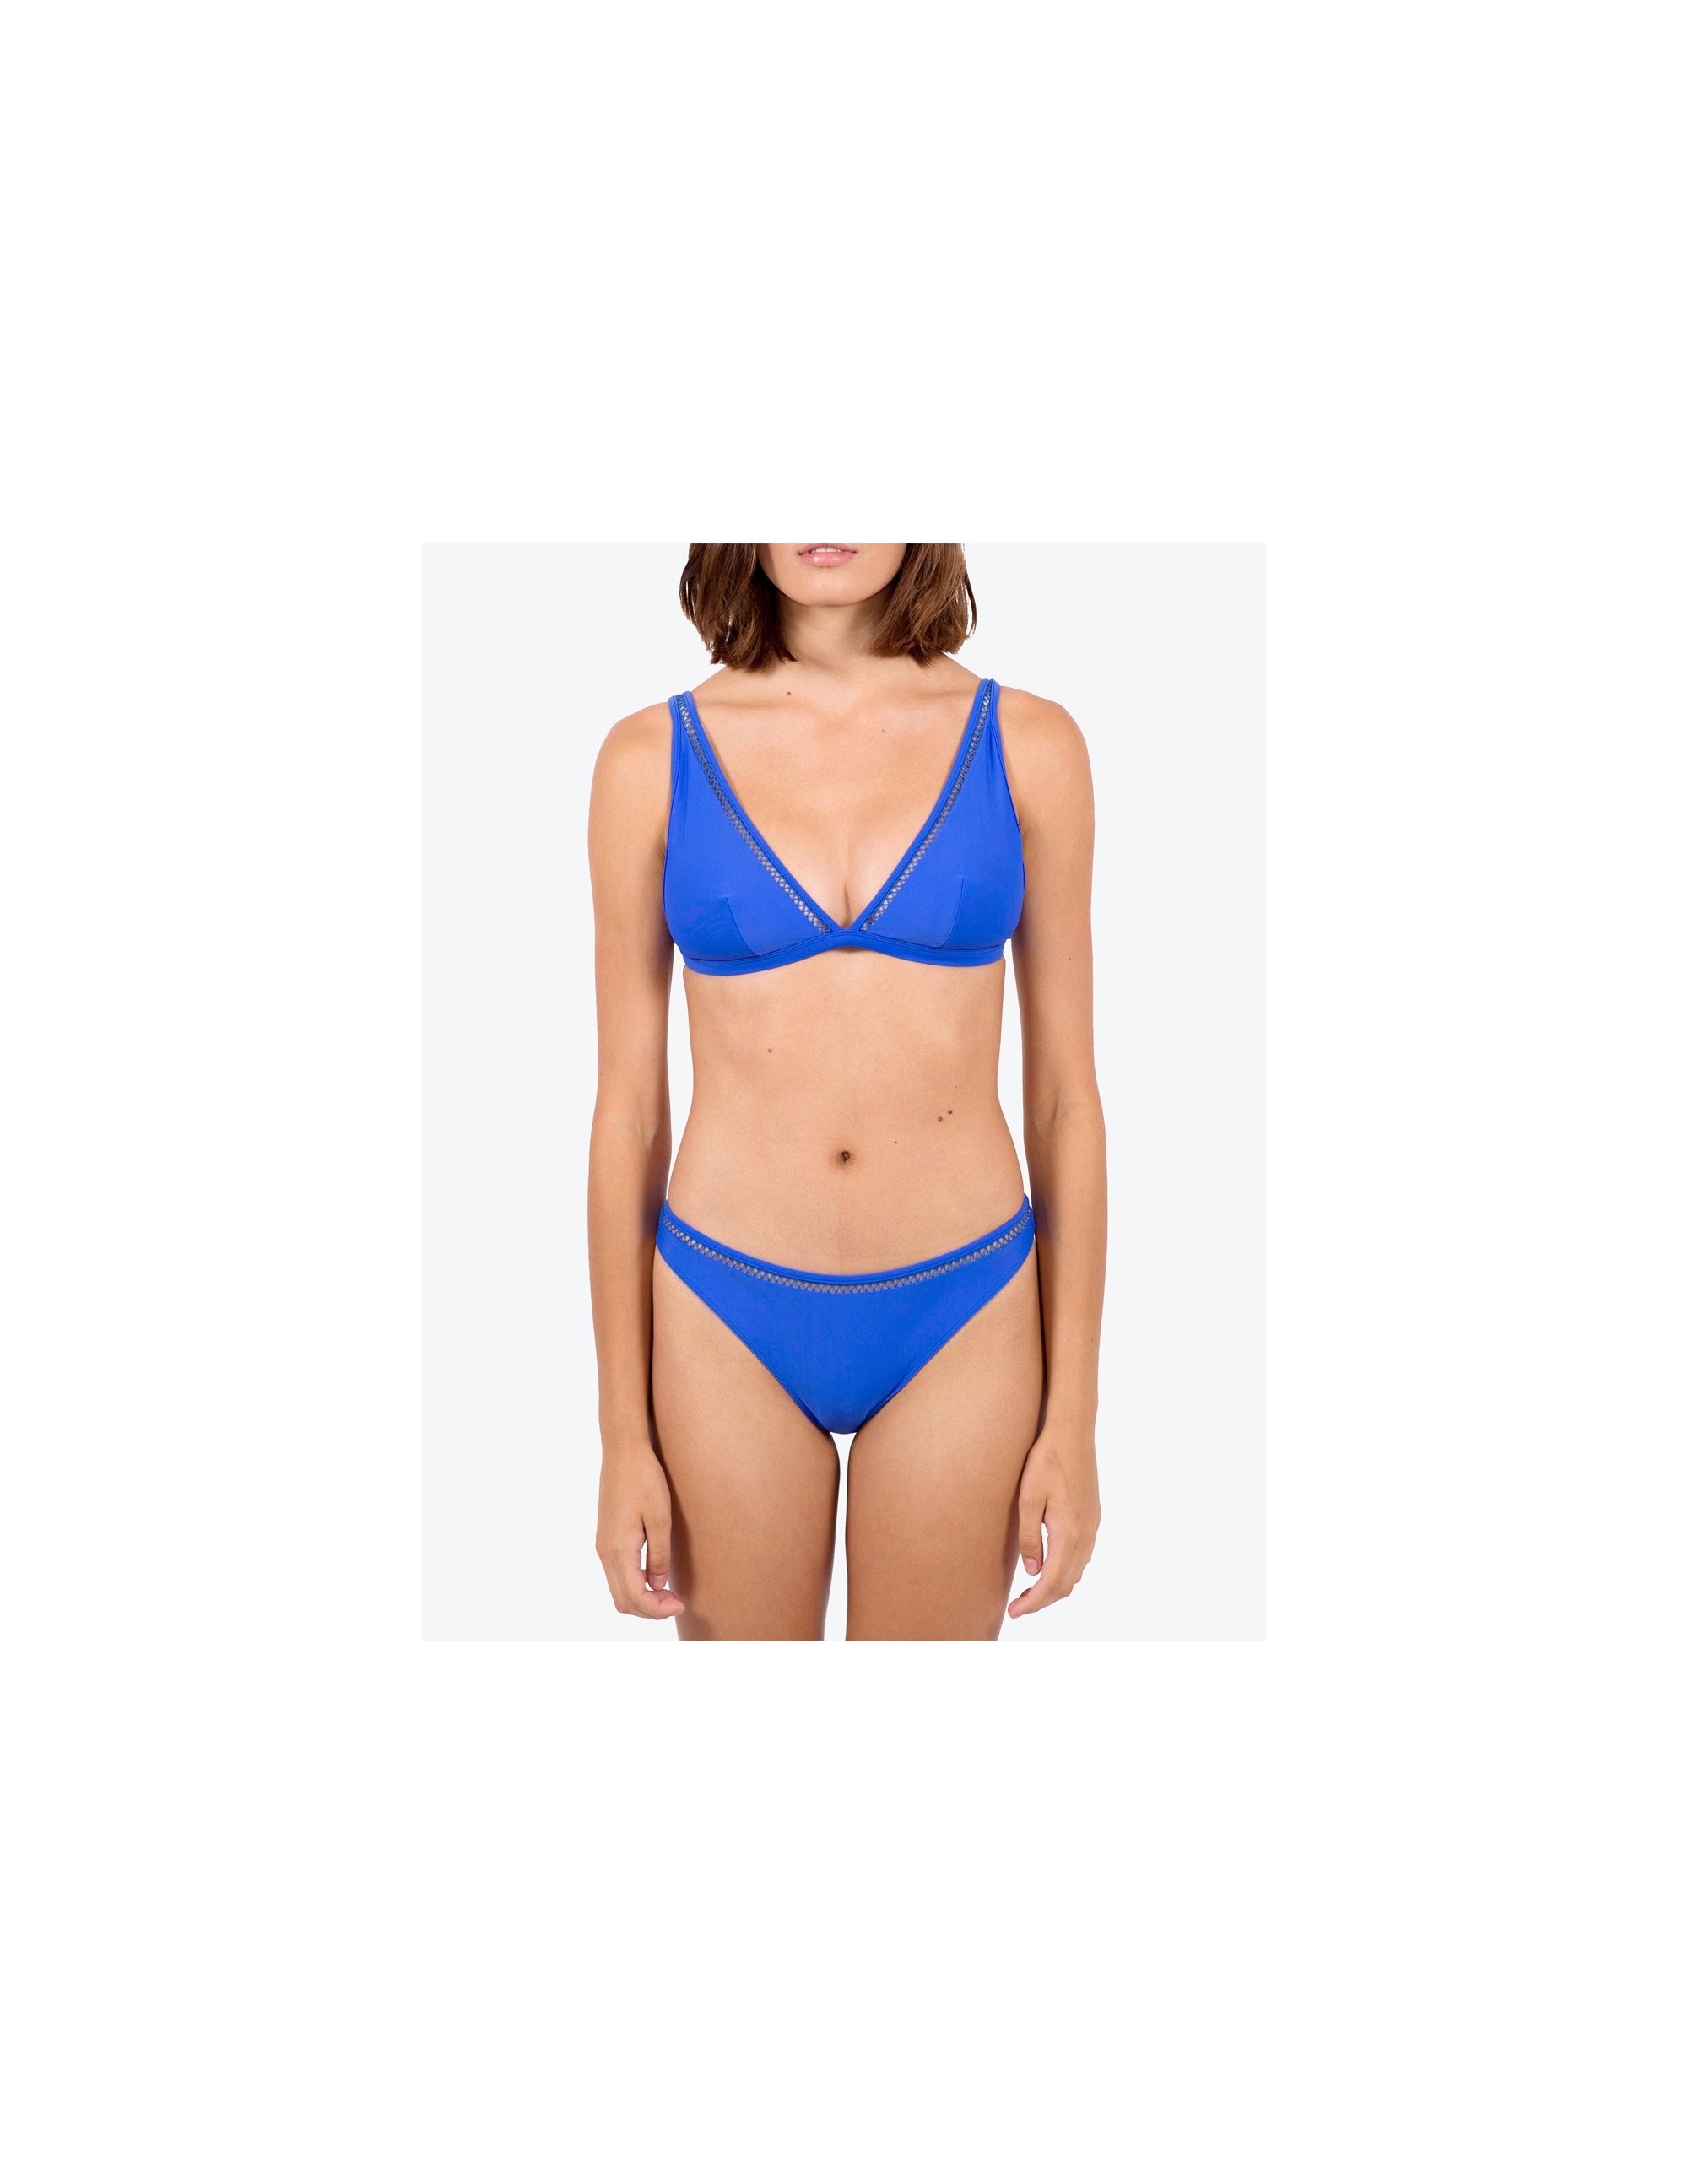 BELLA bikini bottom - ECHO BLUE